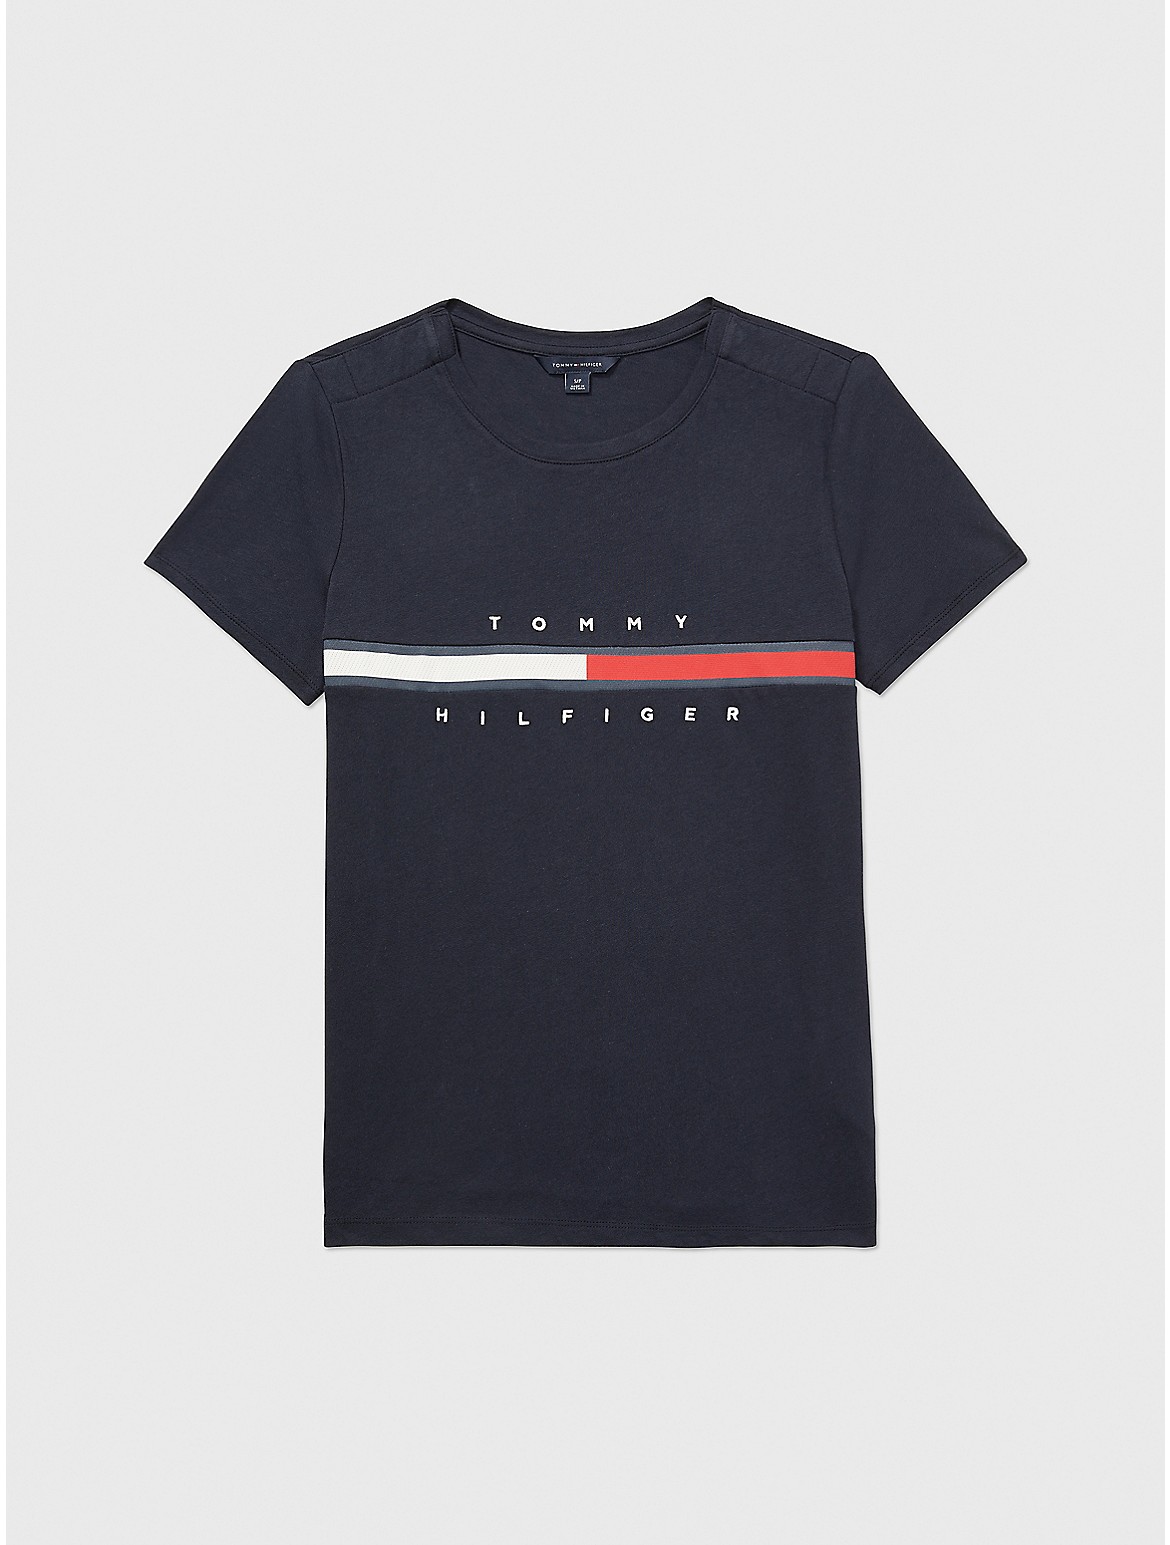 Tommy Hilfiger Women's Stripe Signature T-Shirt